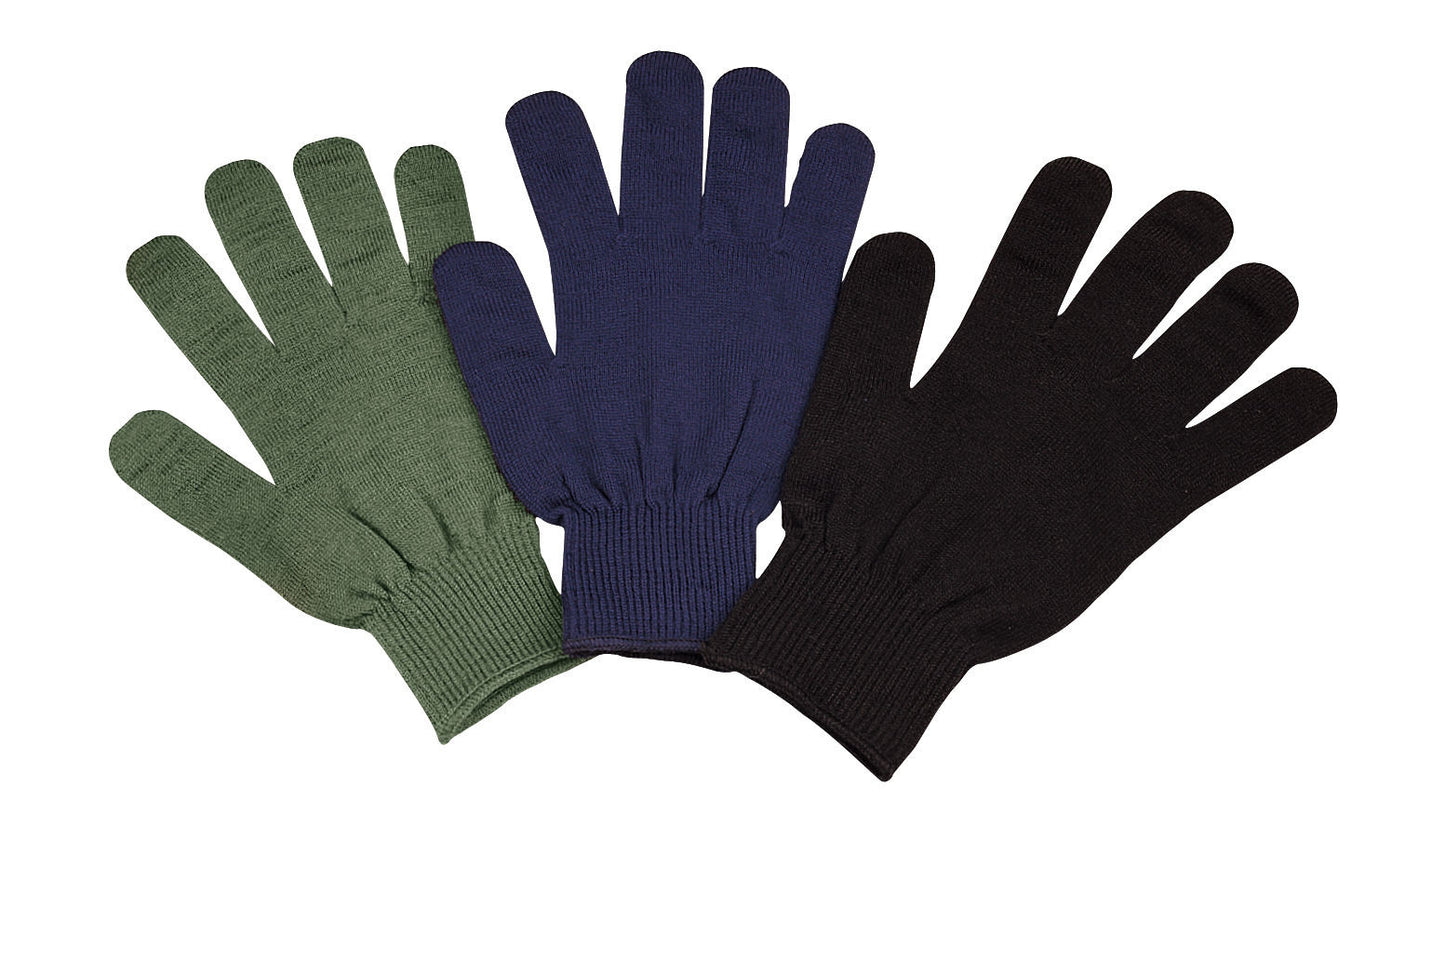 Polypropylene Glove Liners Black or Olive - Made in USA